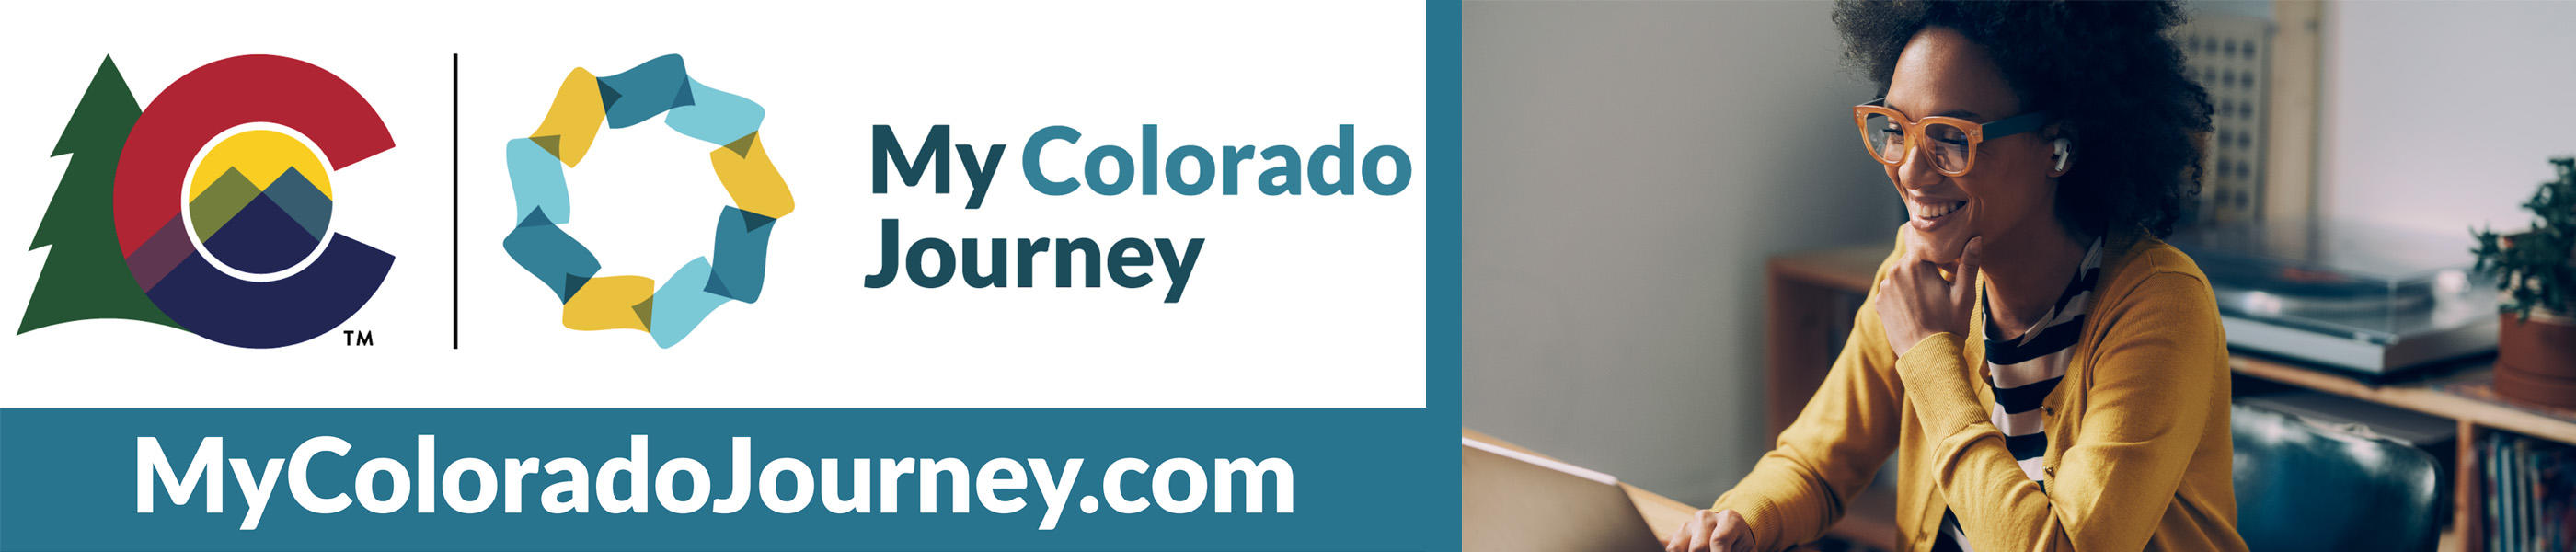 My Colorado Journey banner